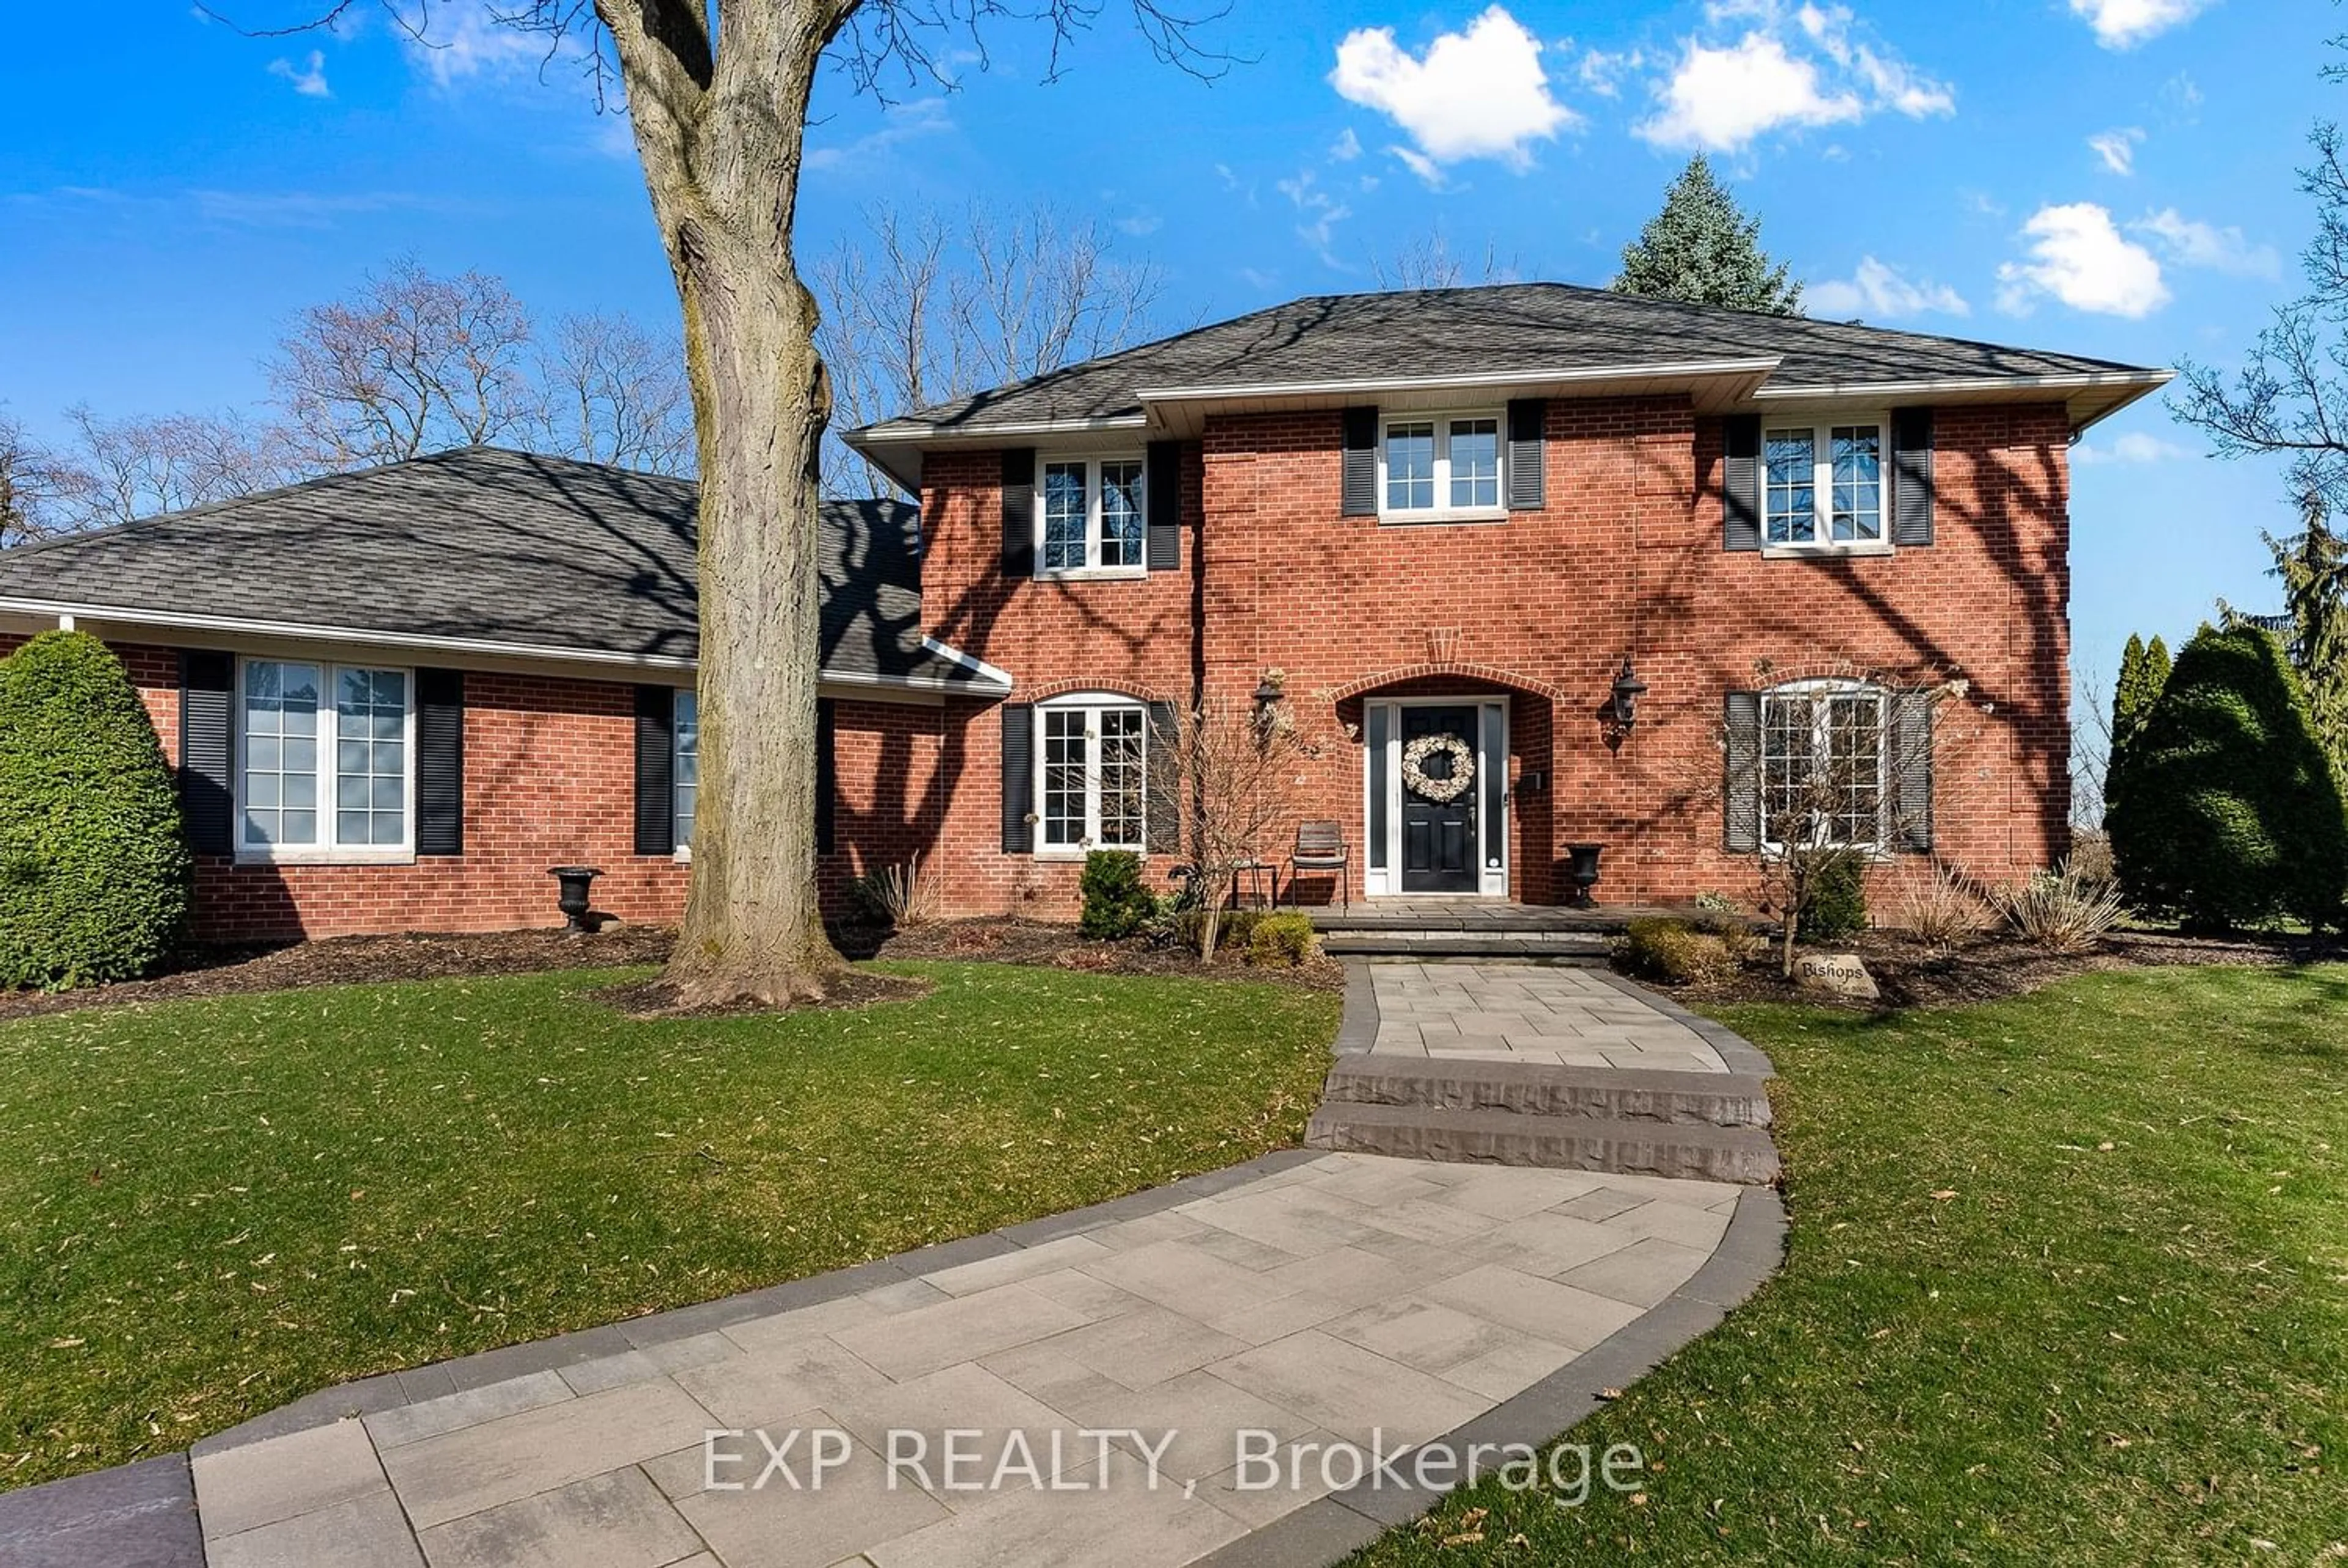 Home with brick exterior material for 6849 Carmella Pl, Niagara Falls Ontario L2J 4J4